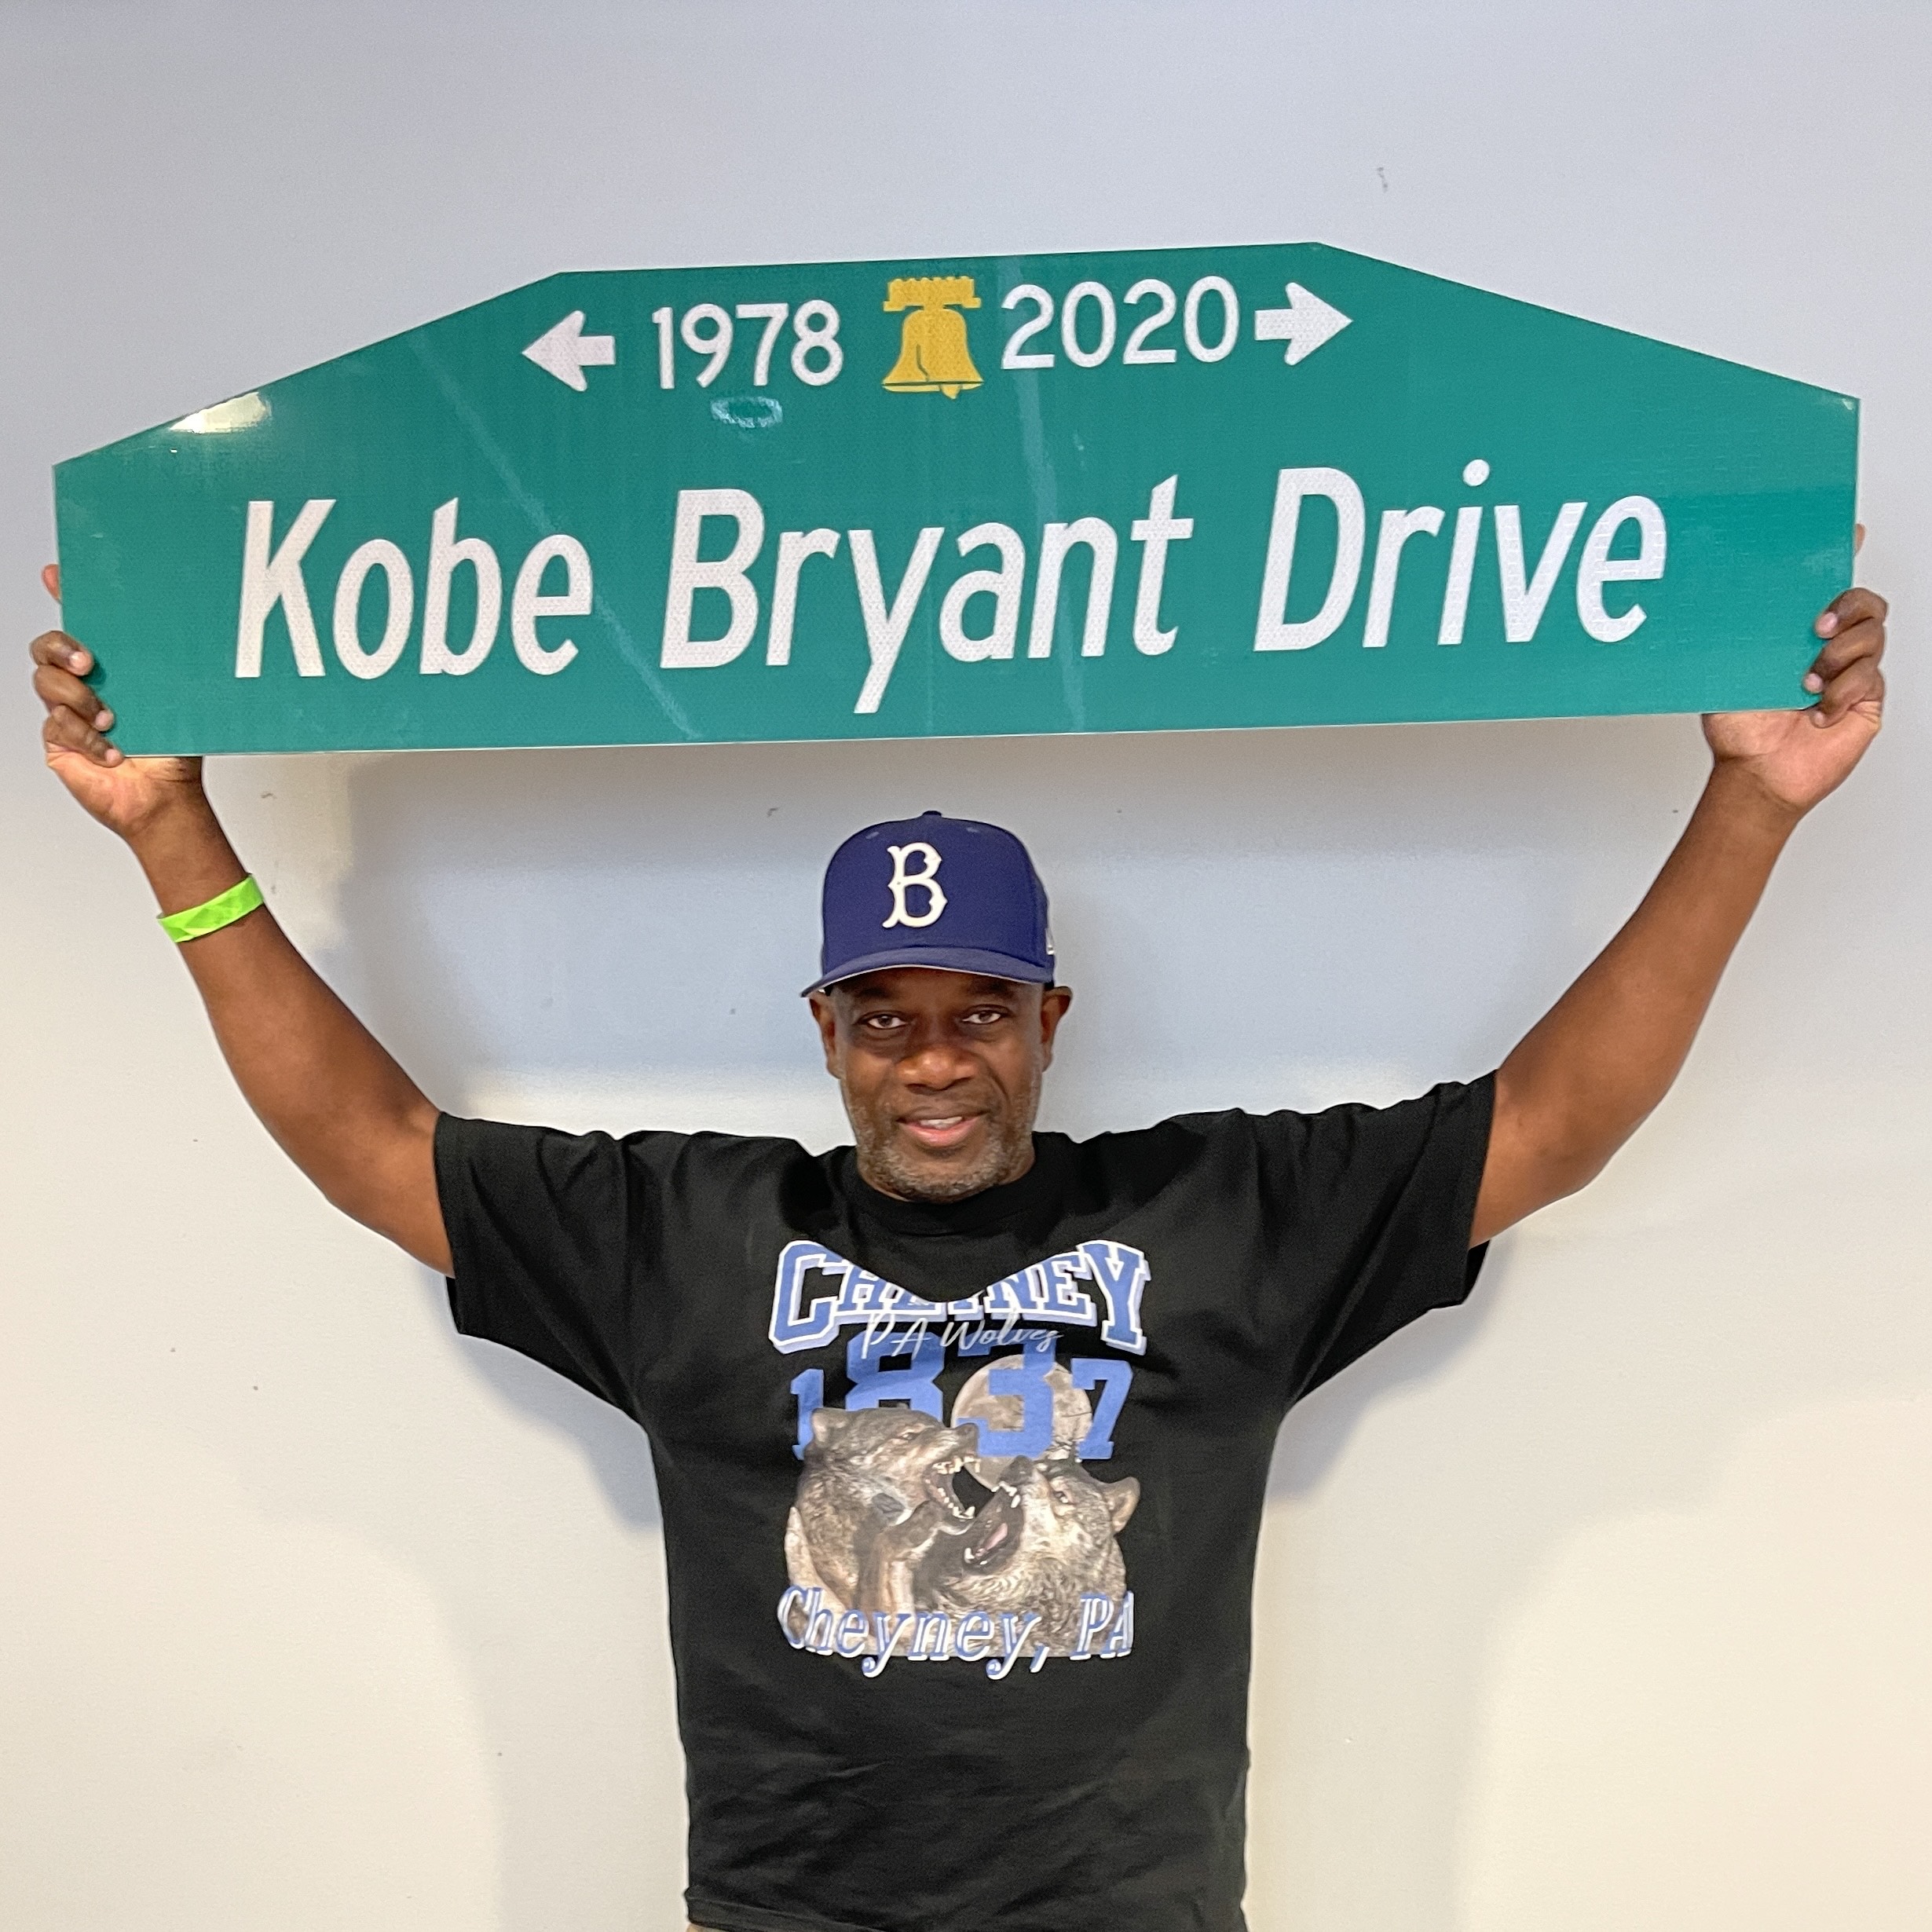 Kobe Bryant Drive? Gianna Bryant Way? The real effort to bring